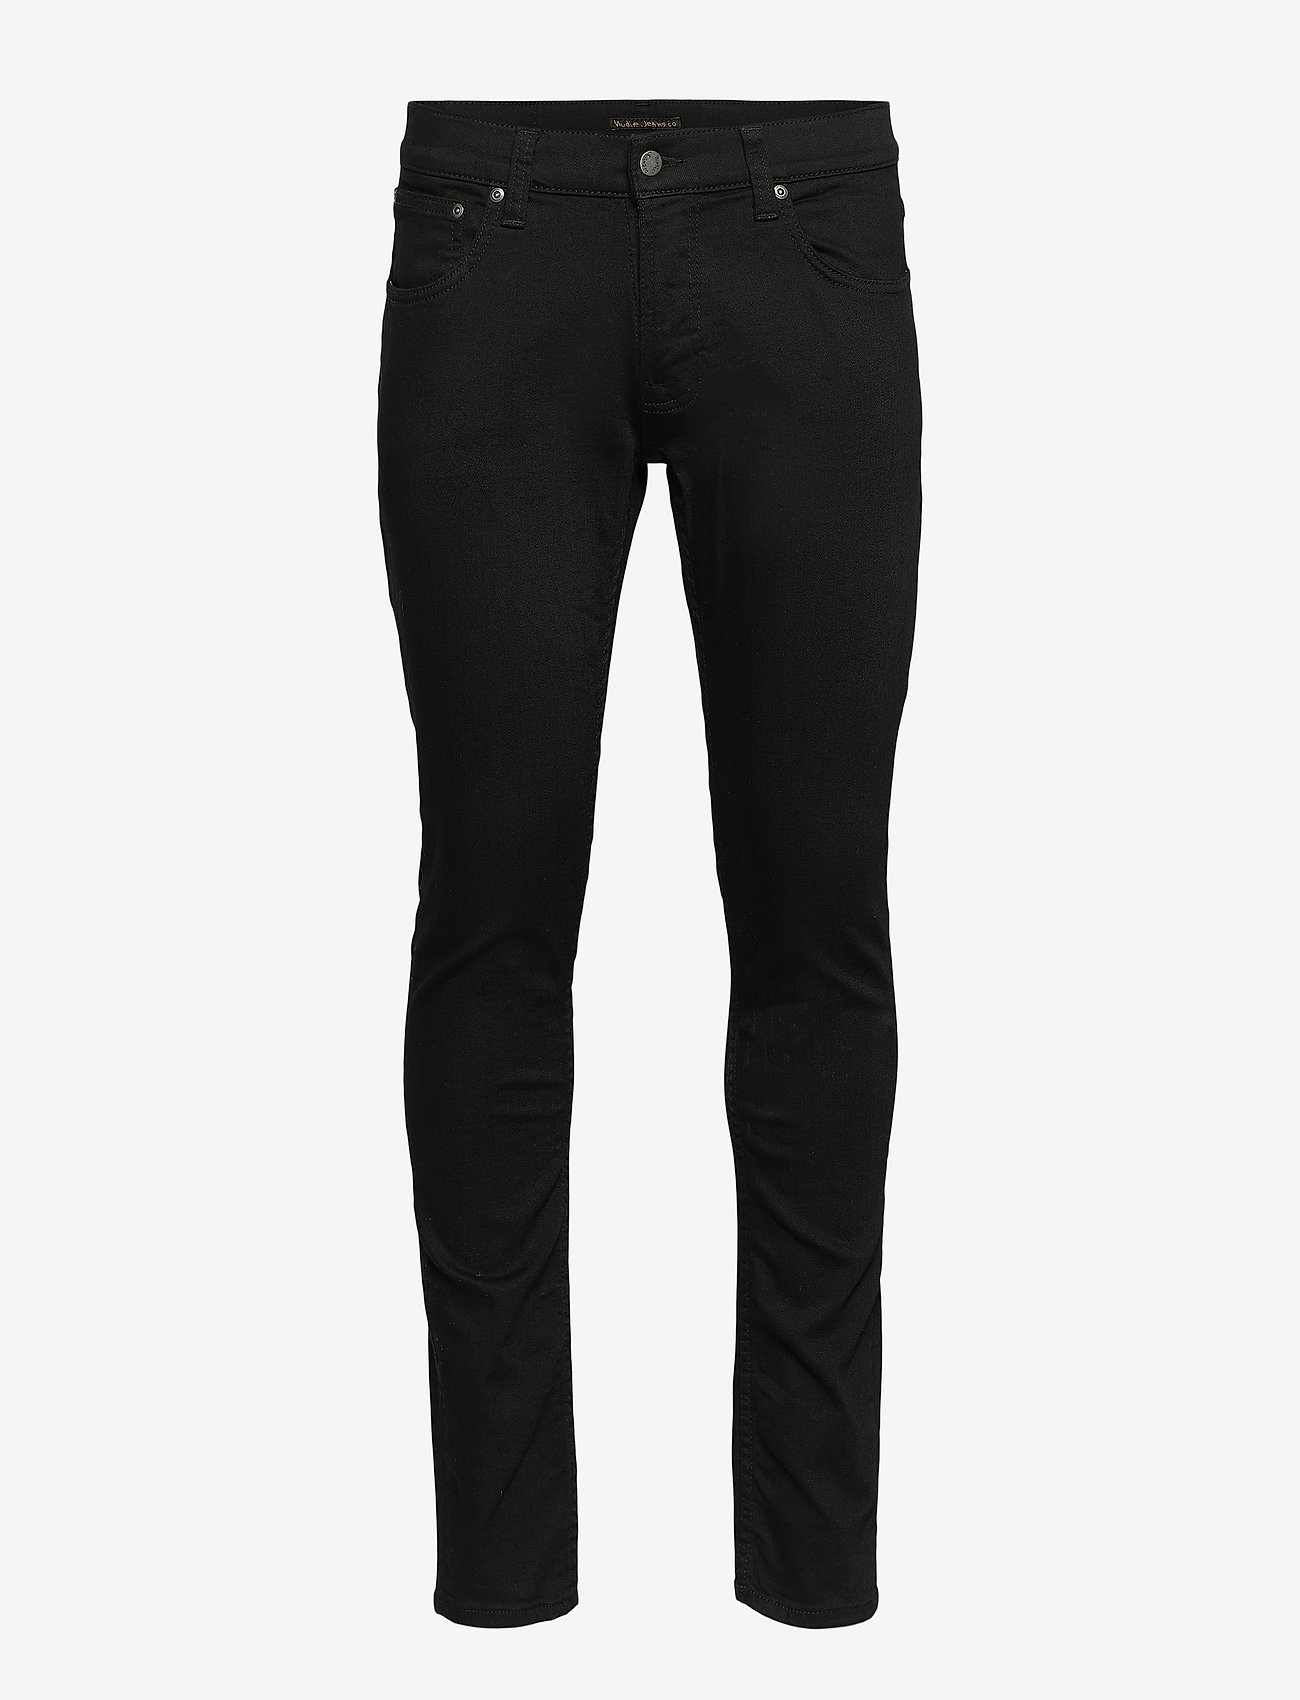 Nudie Jeans - Tight Terry - skinny jeans - ever black - 1